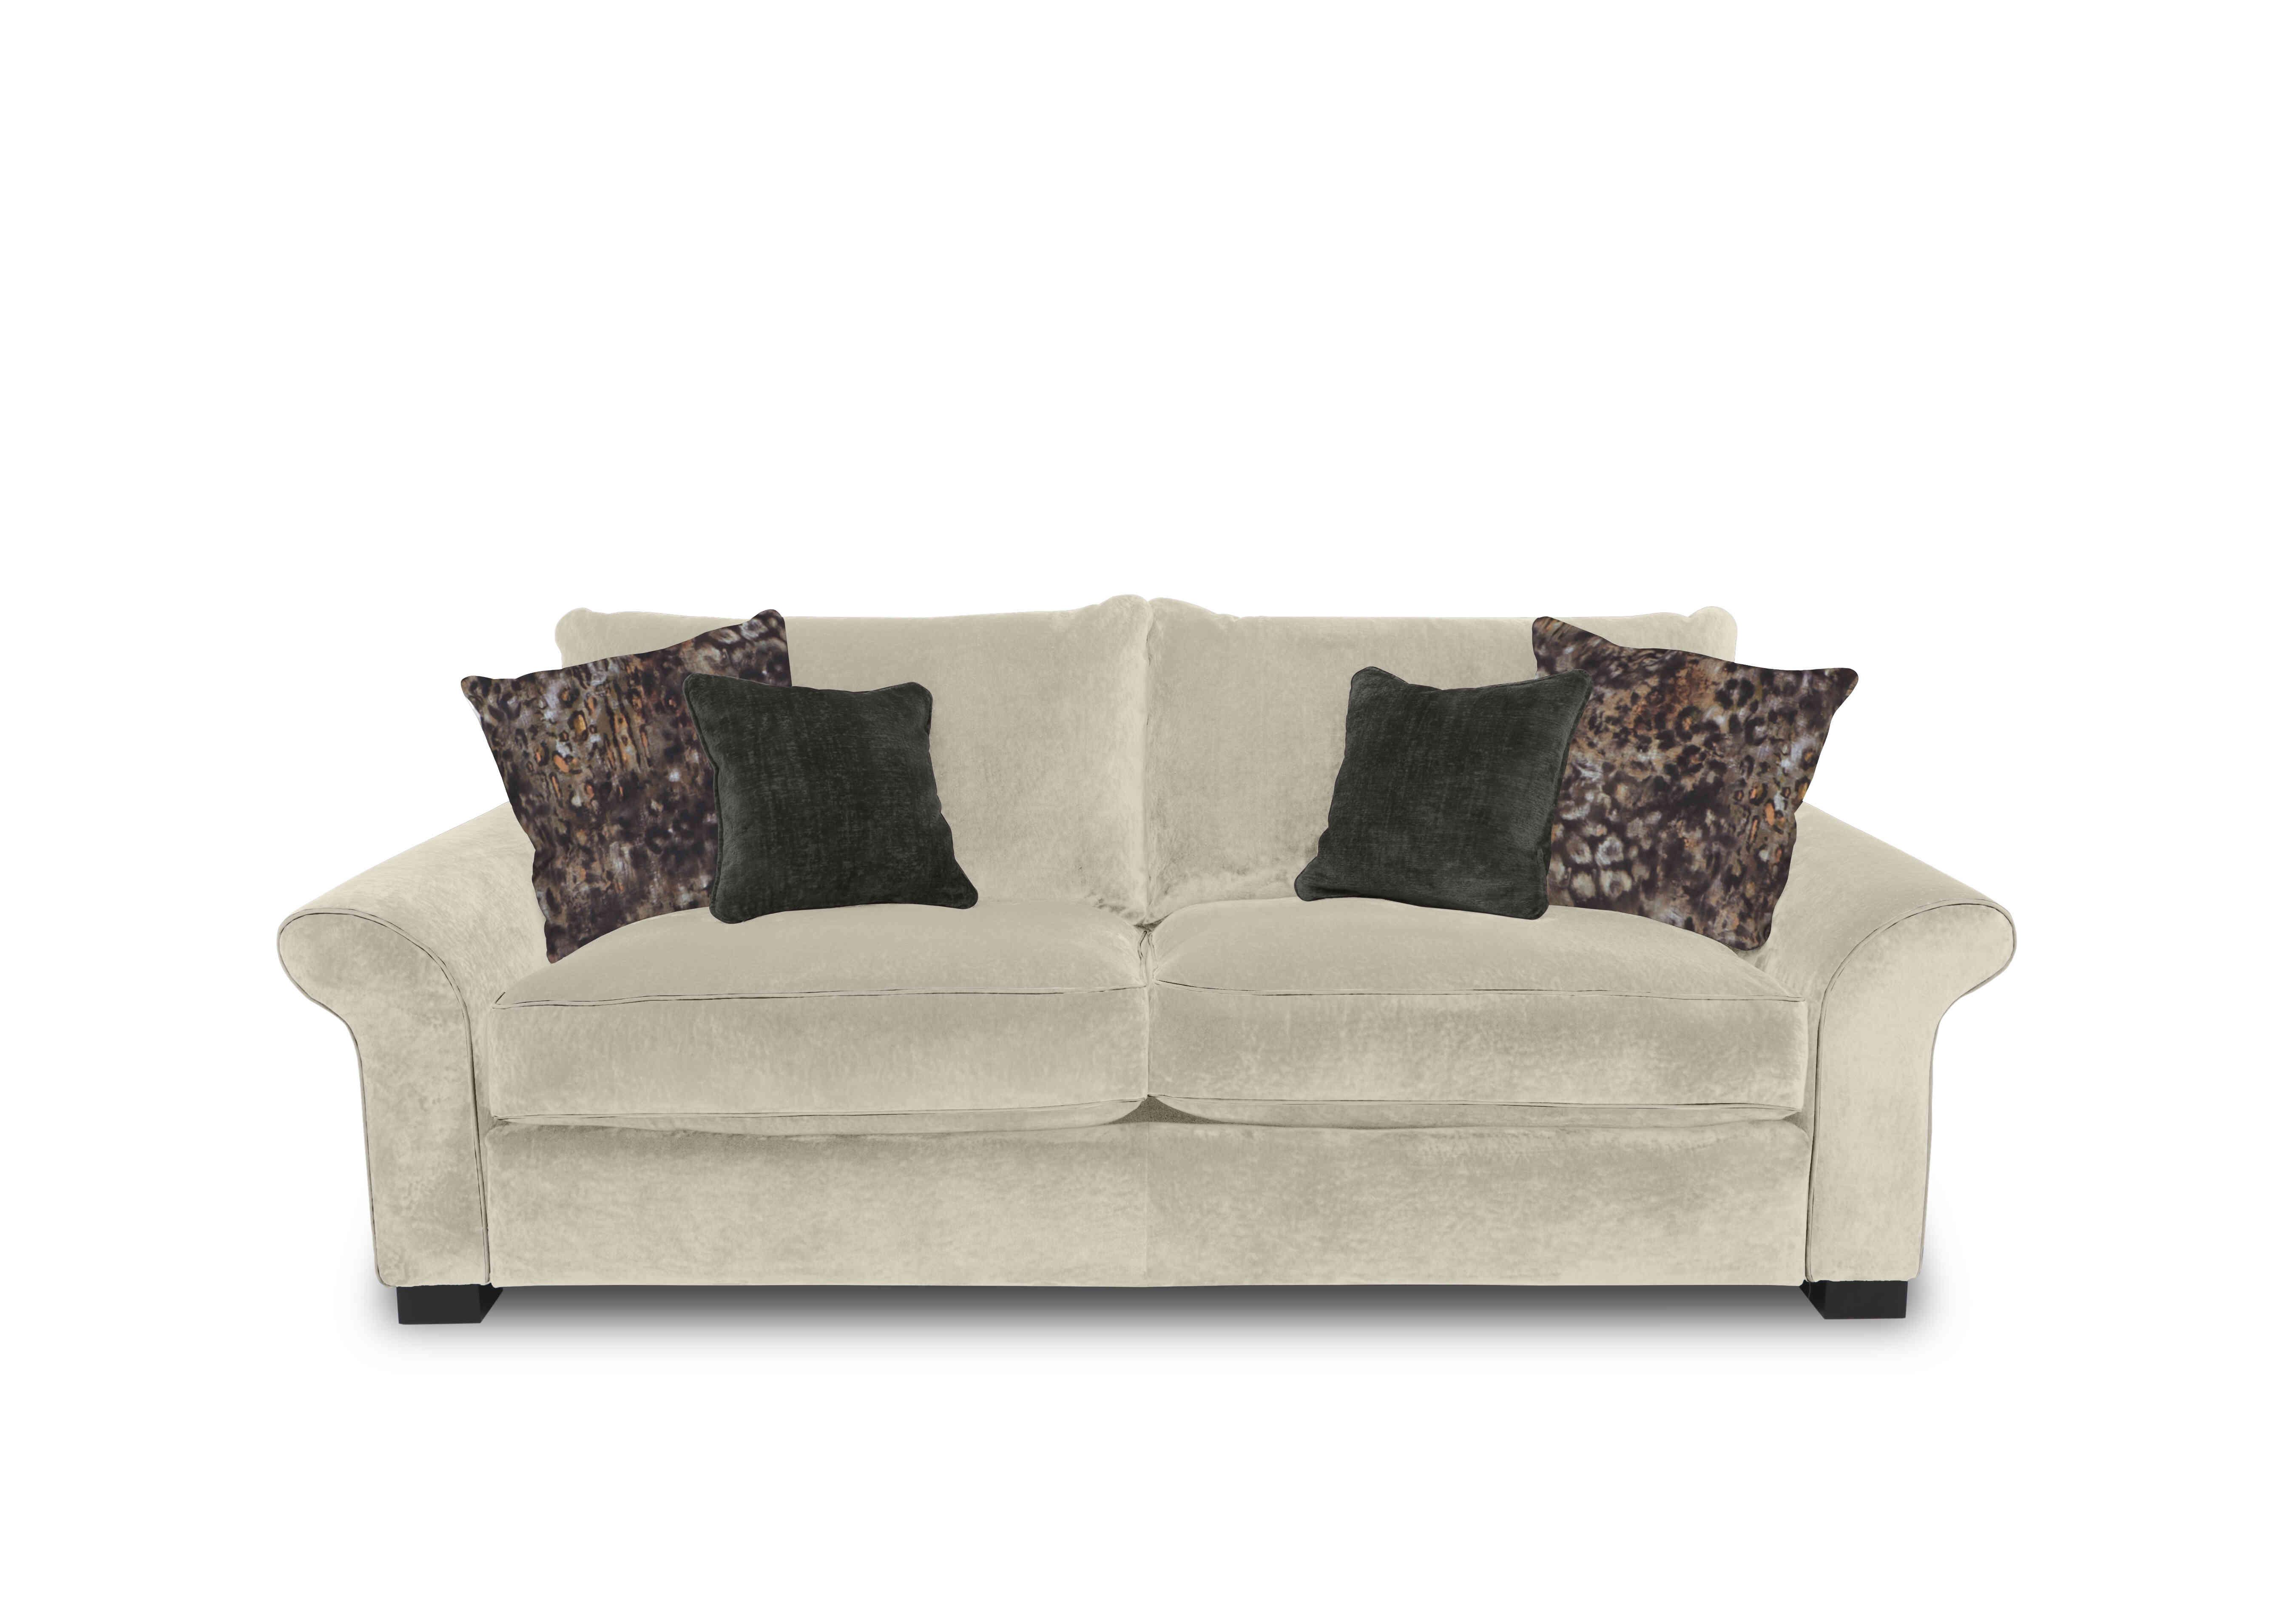 Modern Classics Hyde Park 3 Seater Sofa in Remini Pebble Sp Mf on Furniture Village